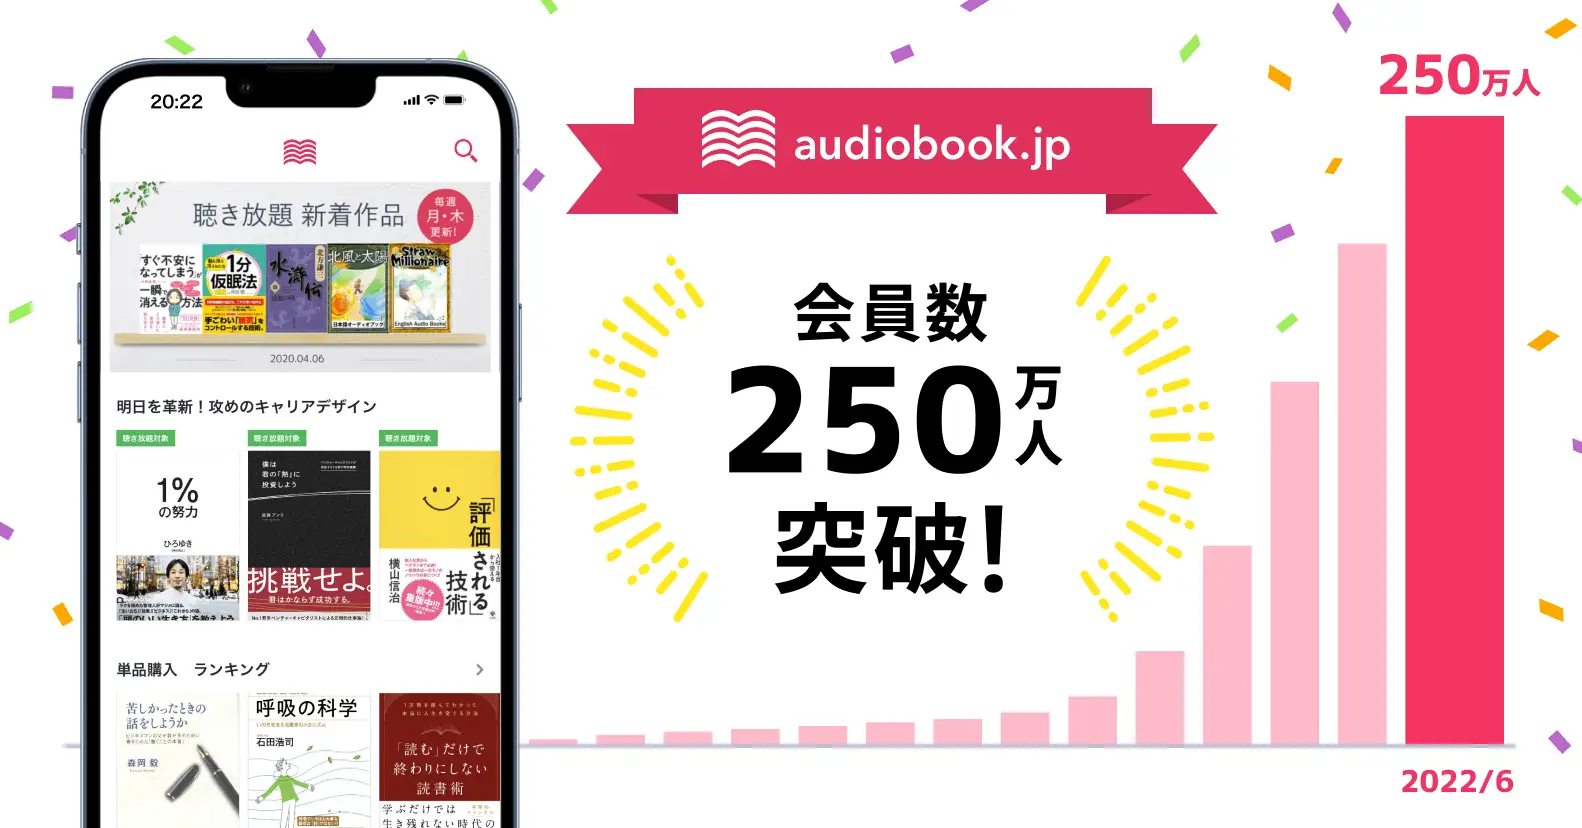 「audiobook․jp」の会員数